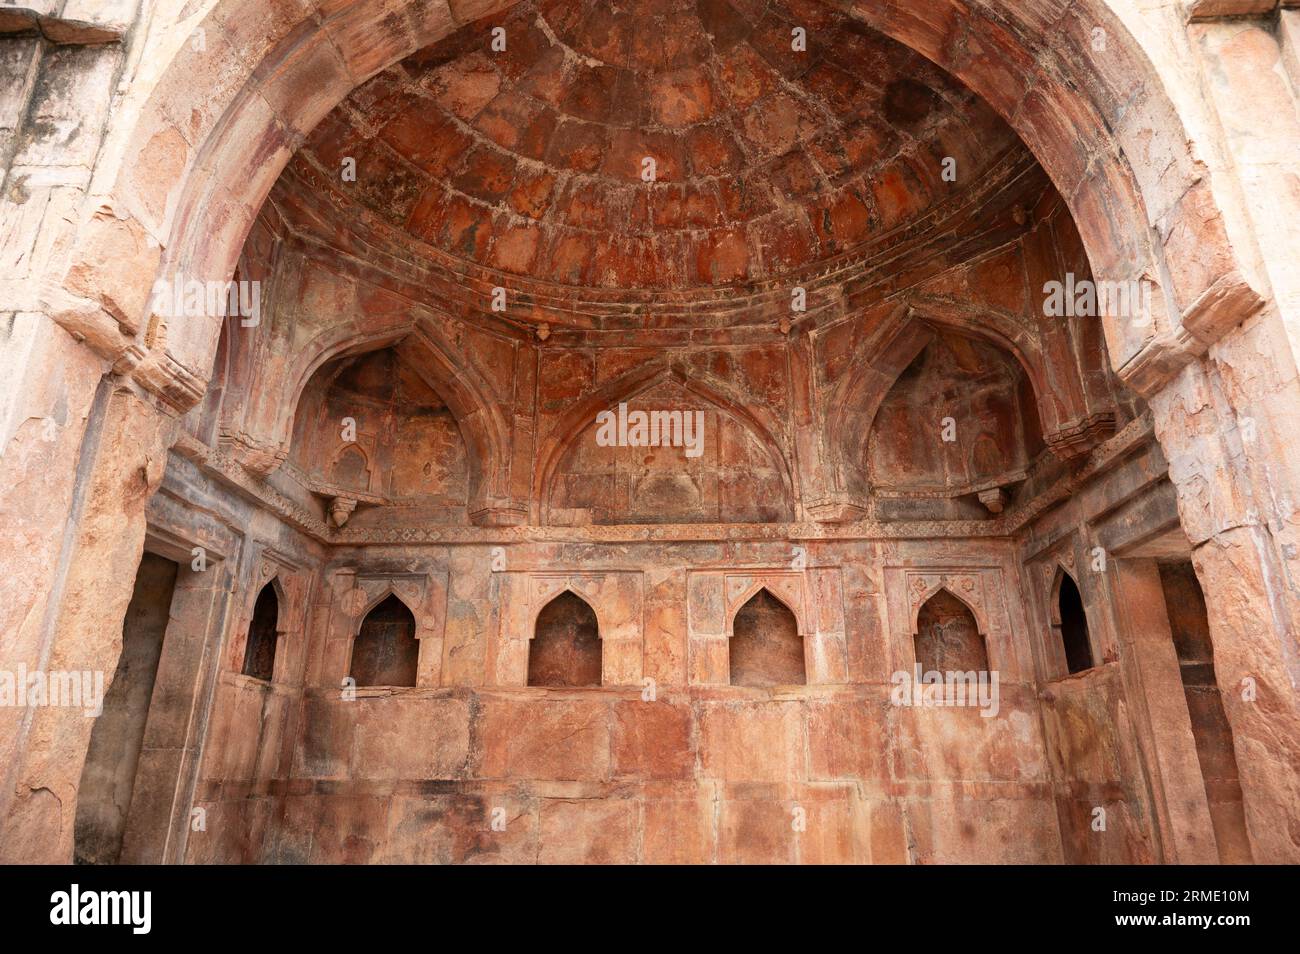 Gumbaj or dome of Nilkanth Mahadev Mandir, located in Mandu, Madhya Pradesh, India Stock Photo